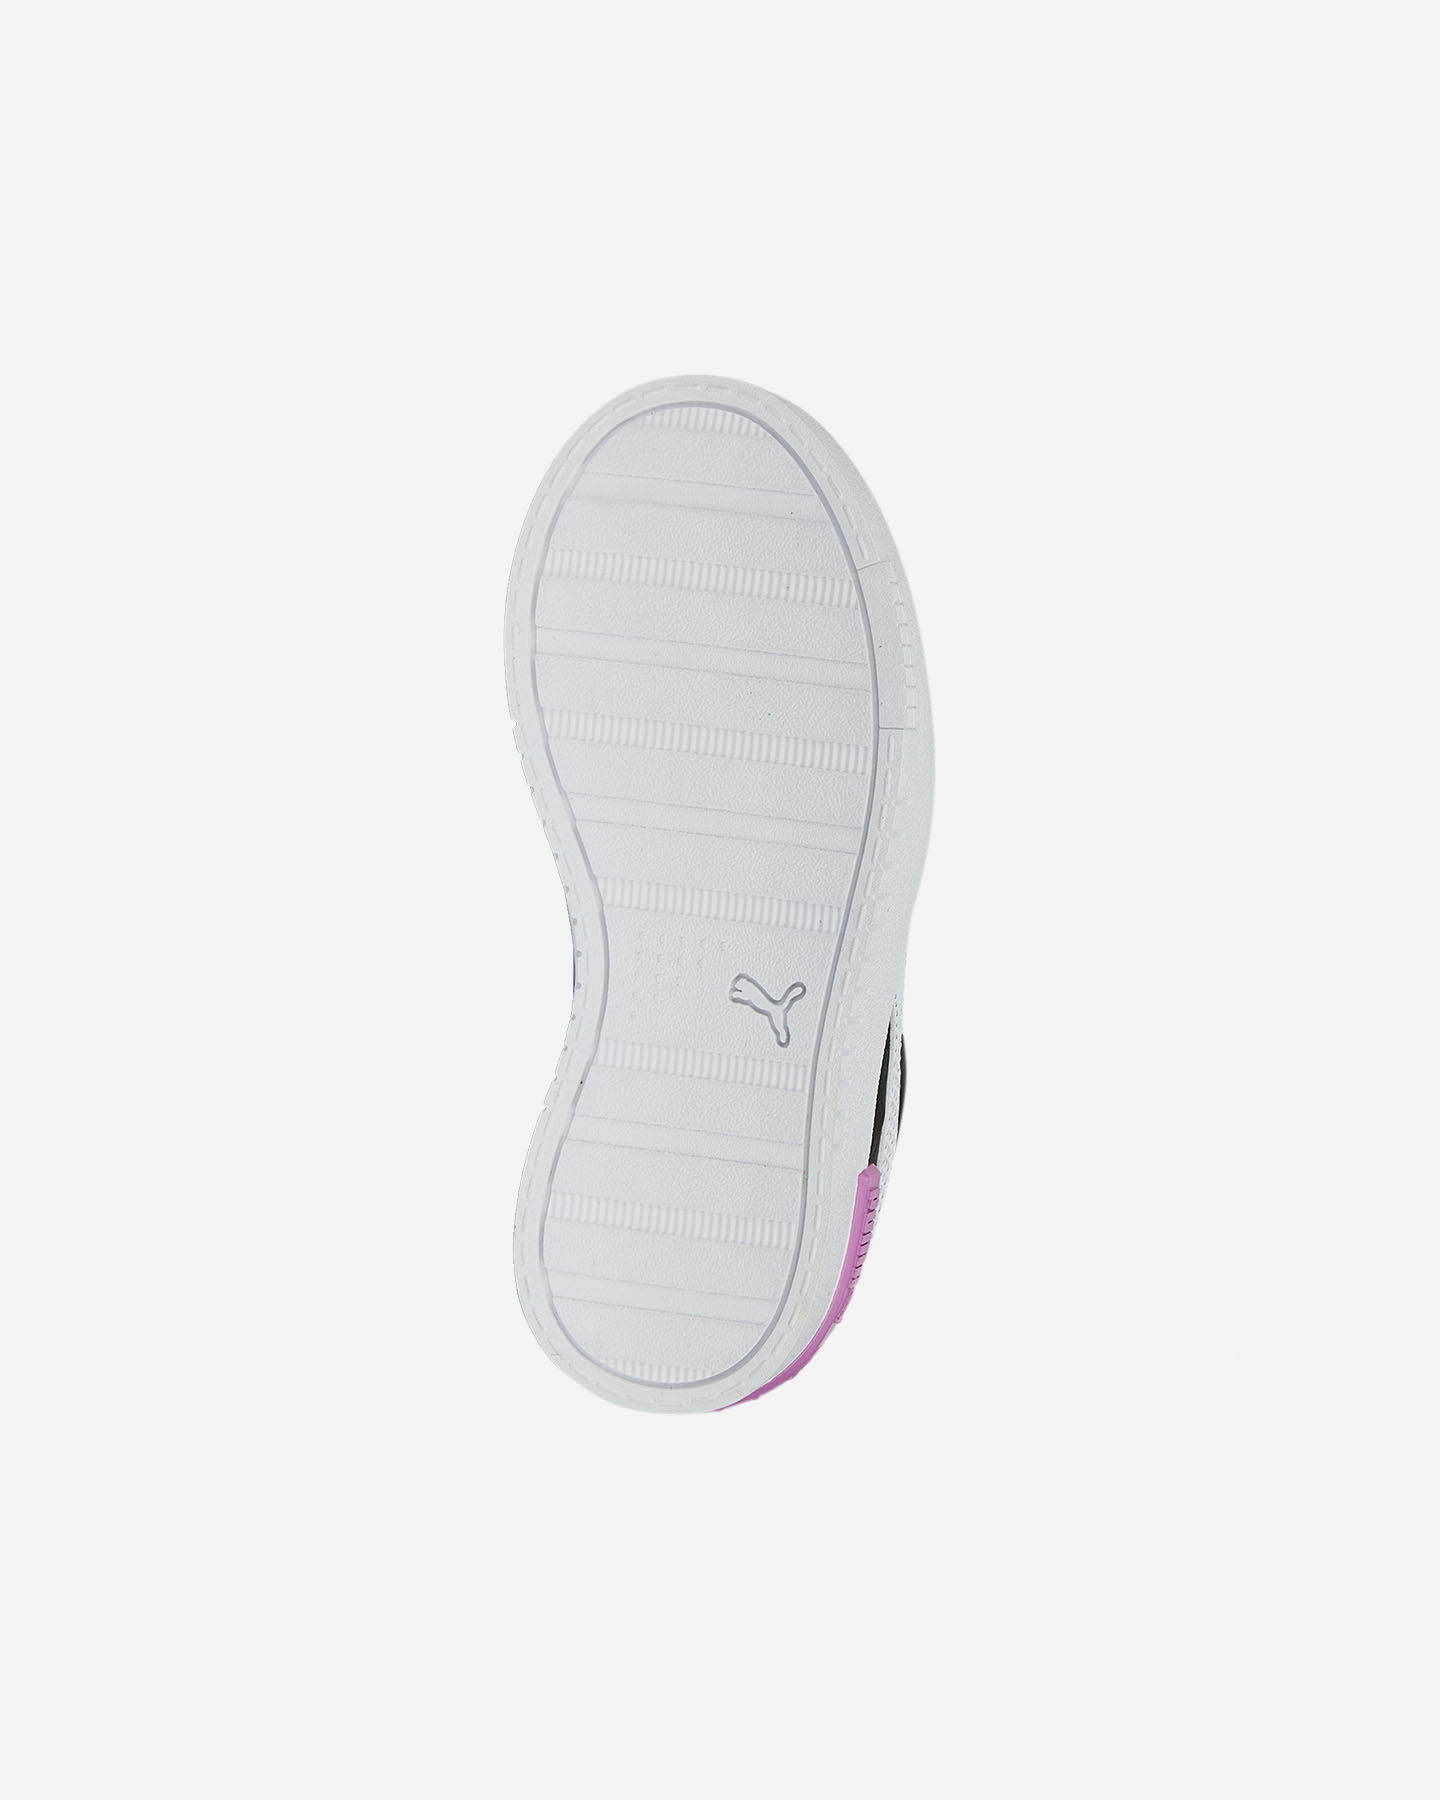  Scarpe sneakers PUMA JADA PS JR S5452458|14|9.5 scatto 2